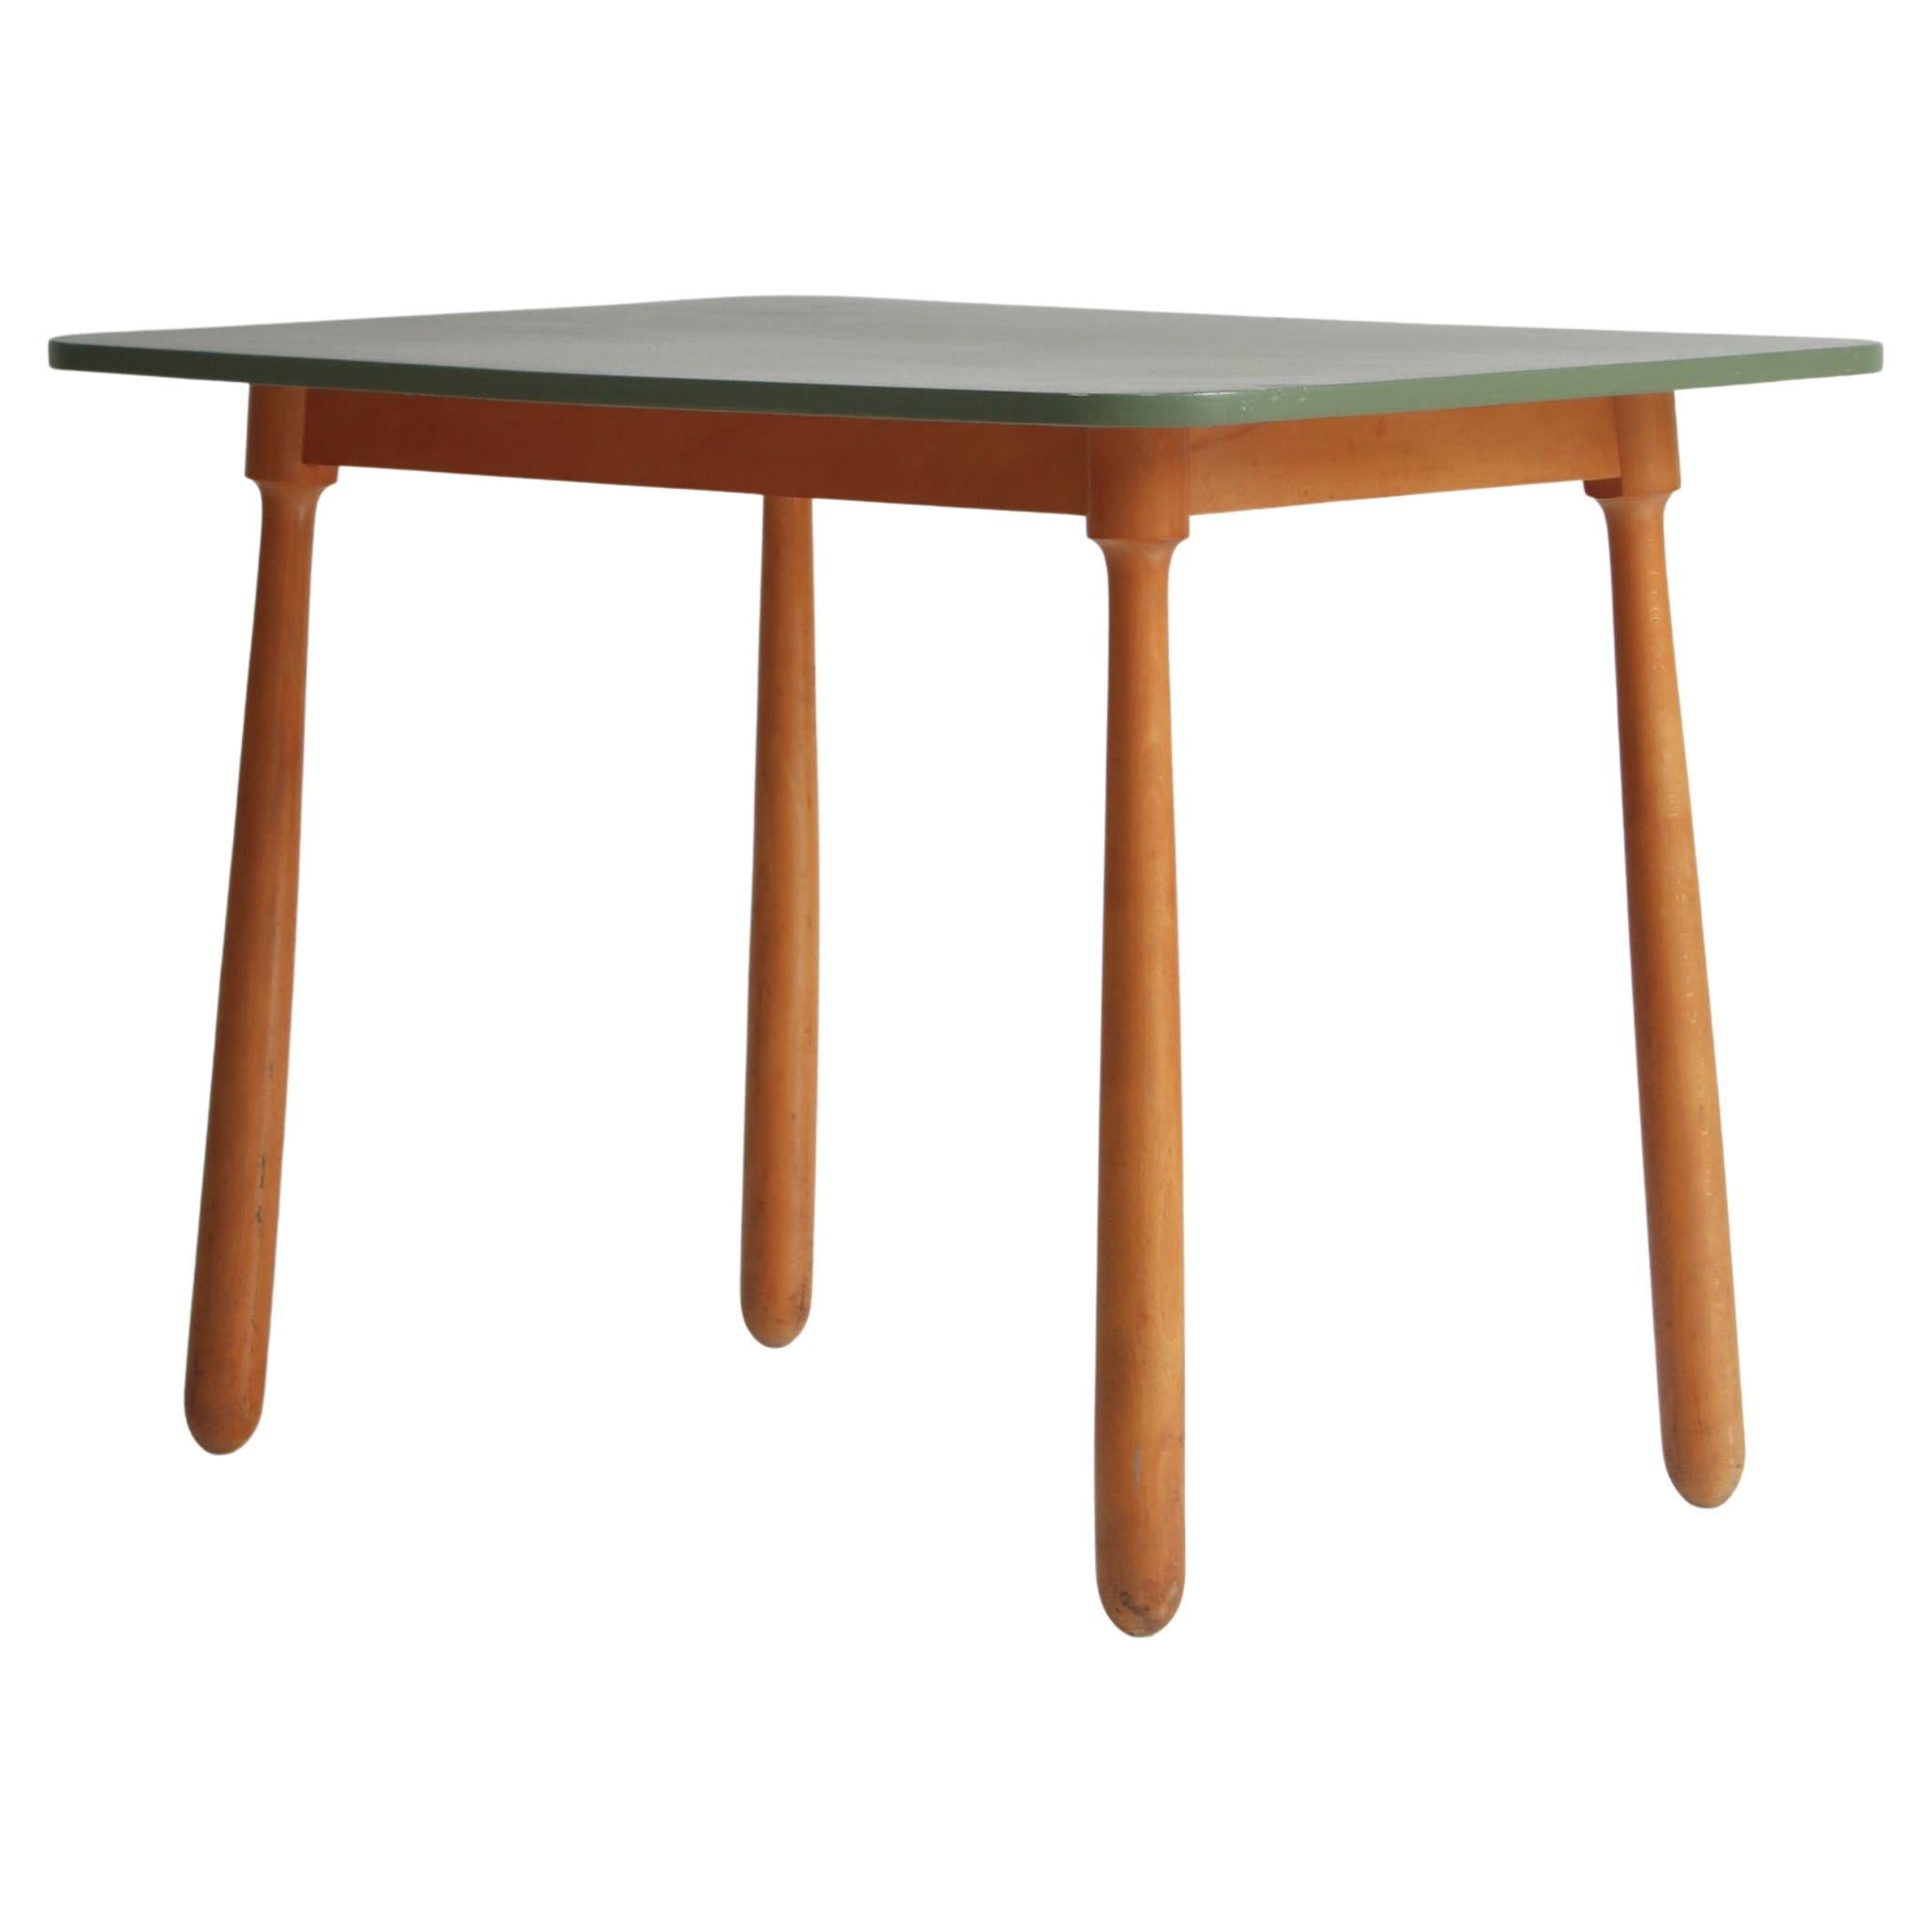 Arnold Madsen Club Legged Desk / Table in Beech, Scandinavian Modern, 1940s For Sale